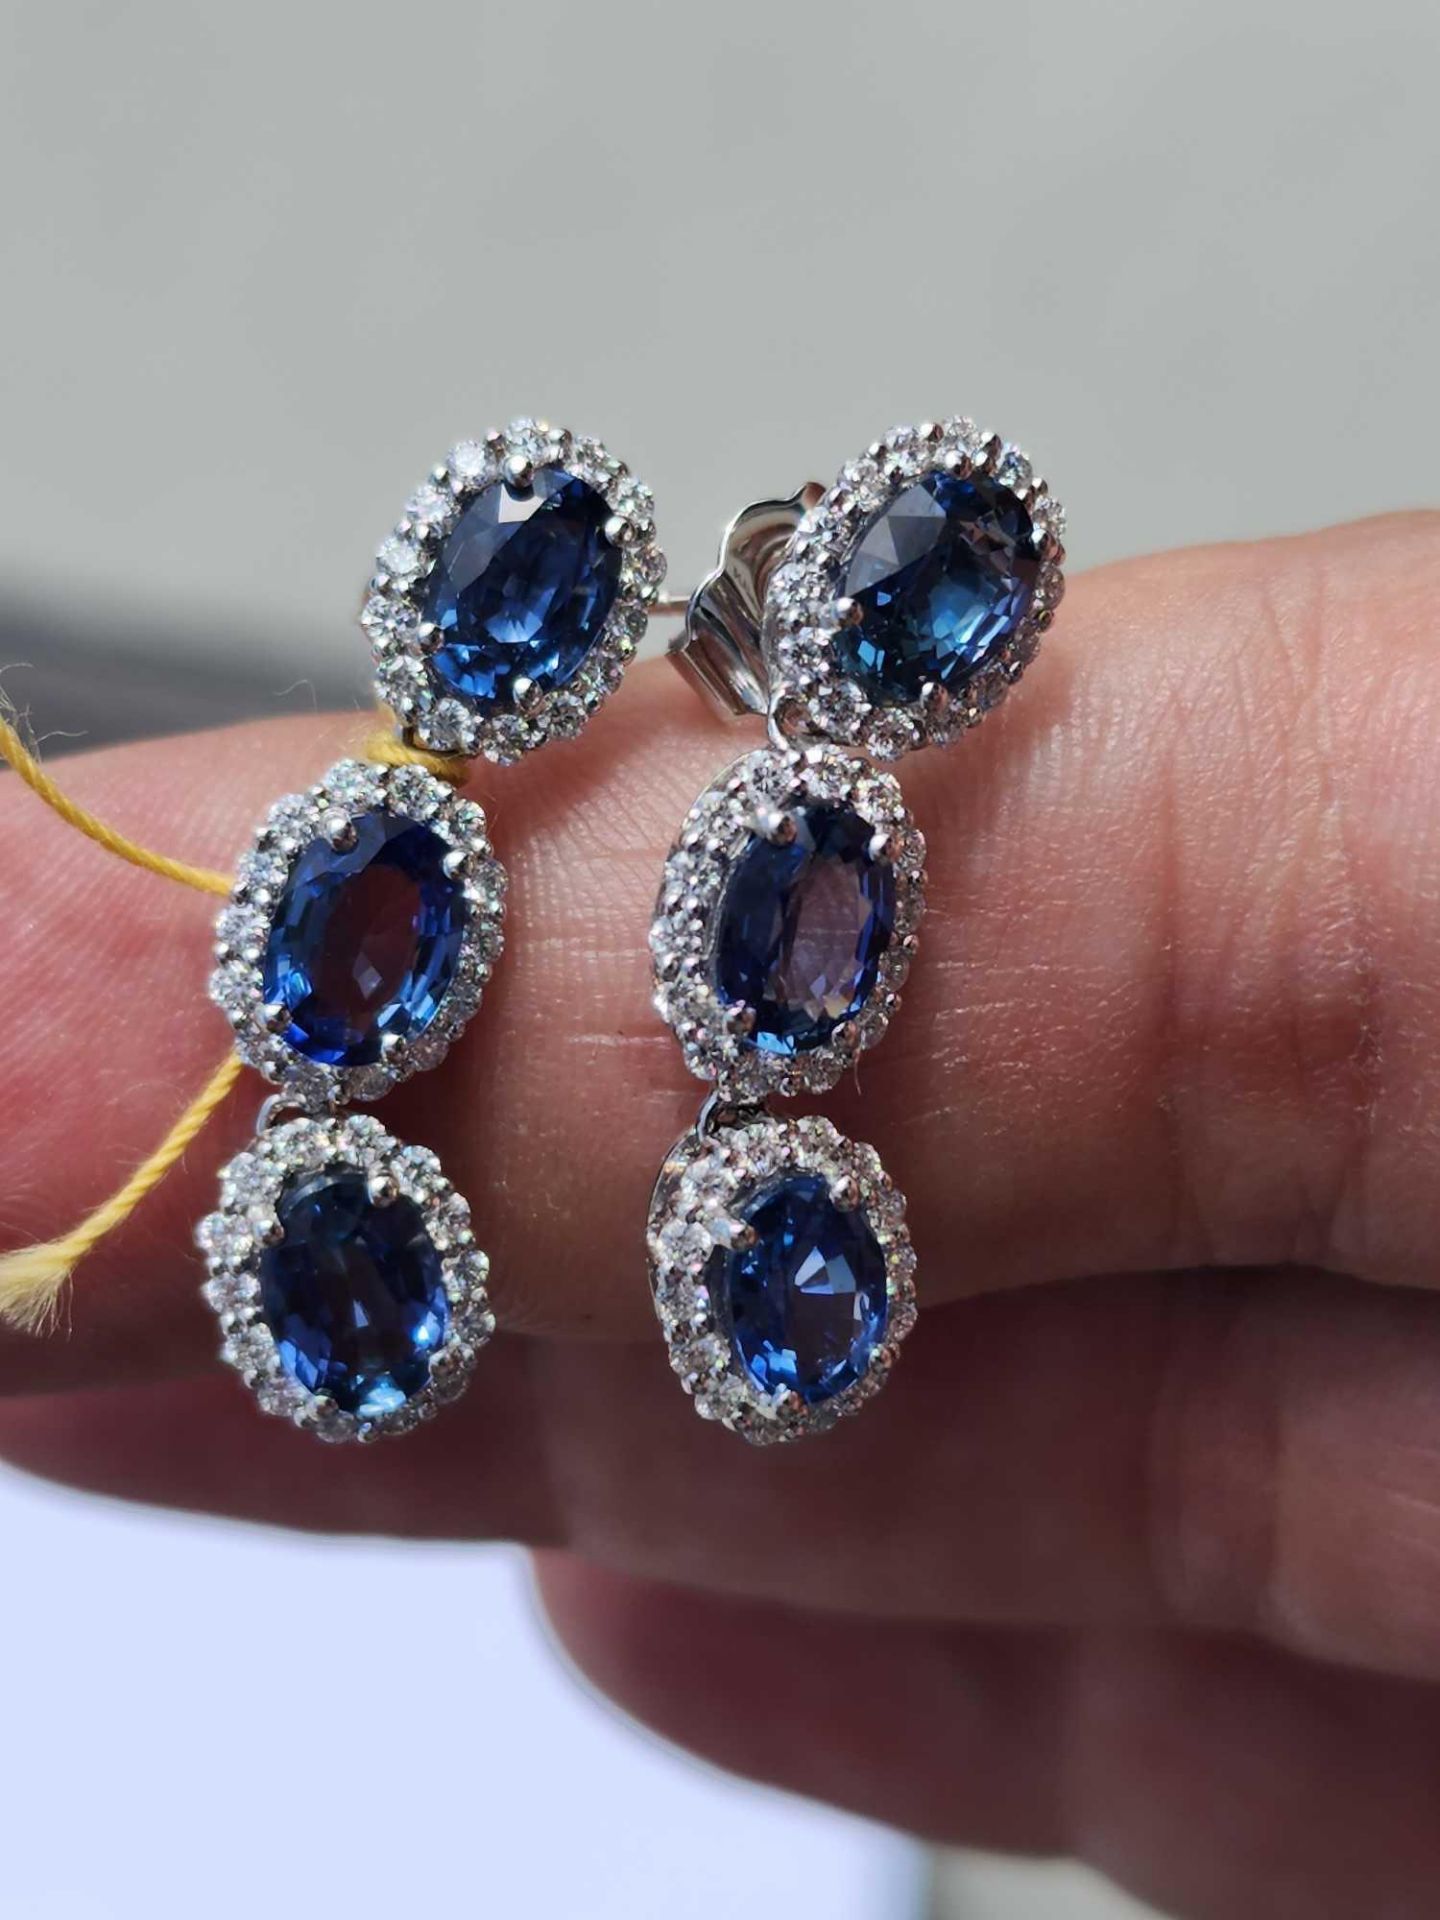 14kt White Gold ladies cast & assembled sapphire & diamond dangle earrings - Image 2 of 7